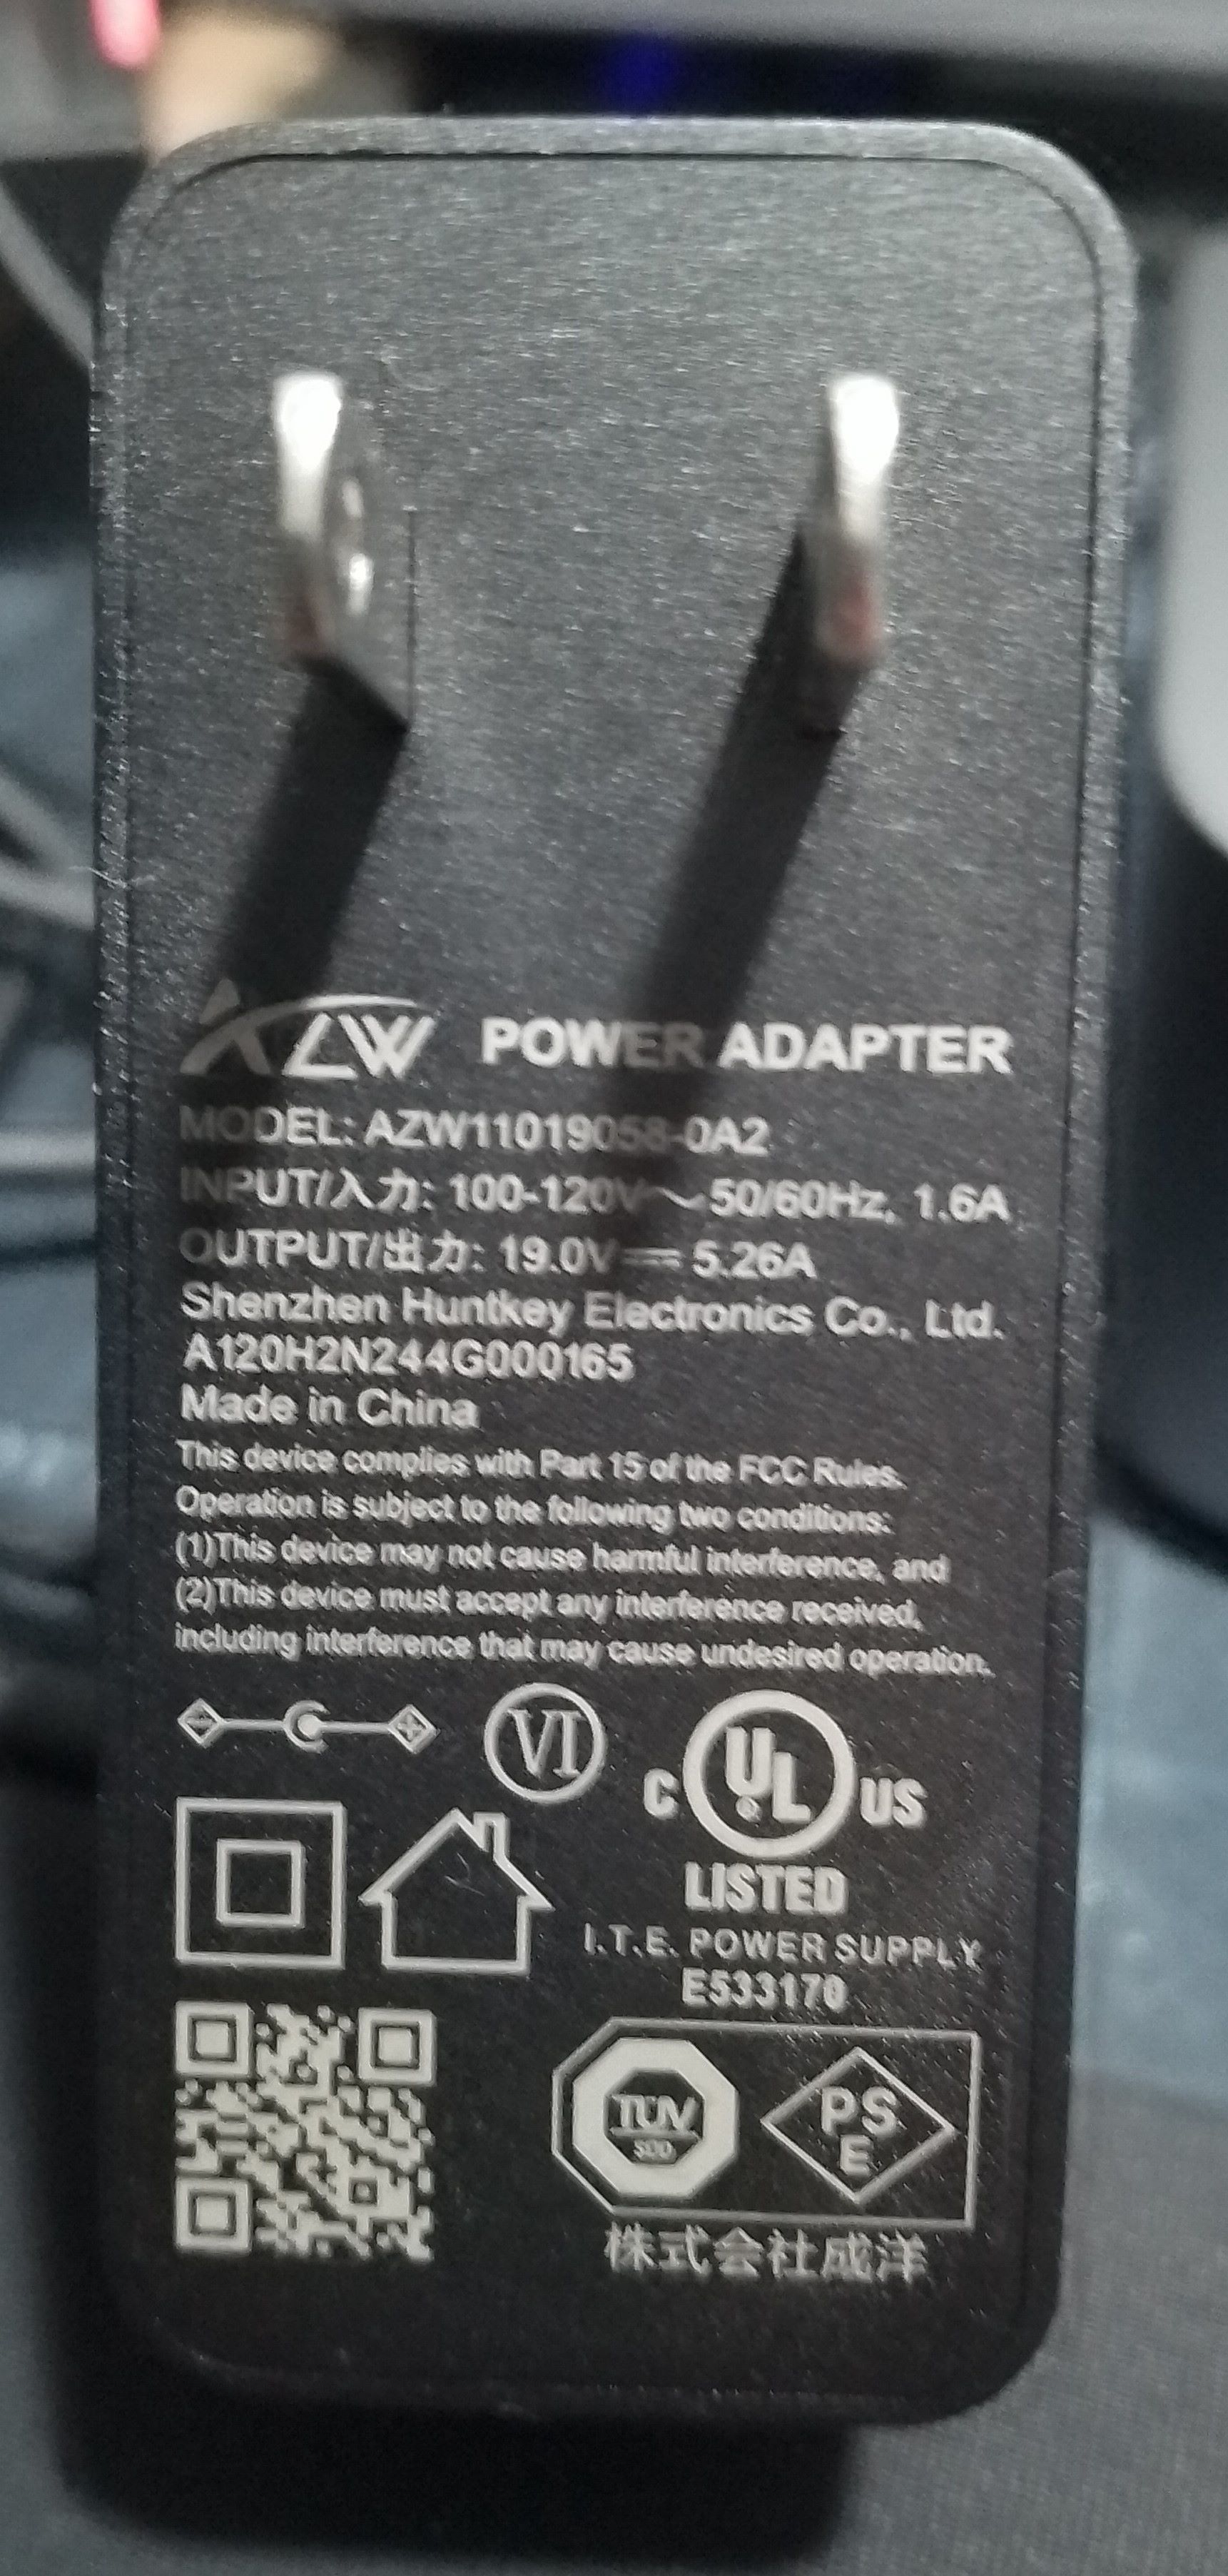 SER8 power adaptor